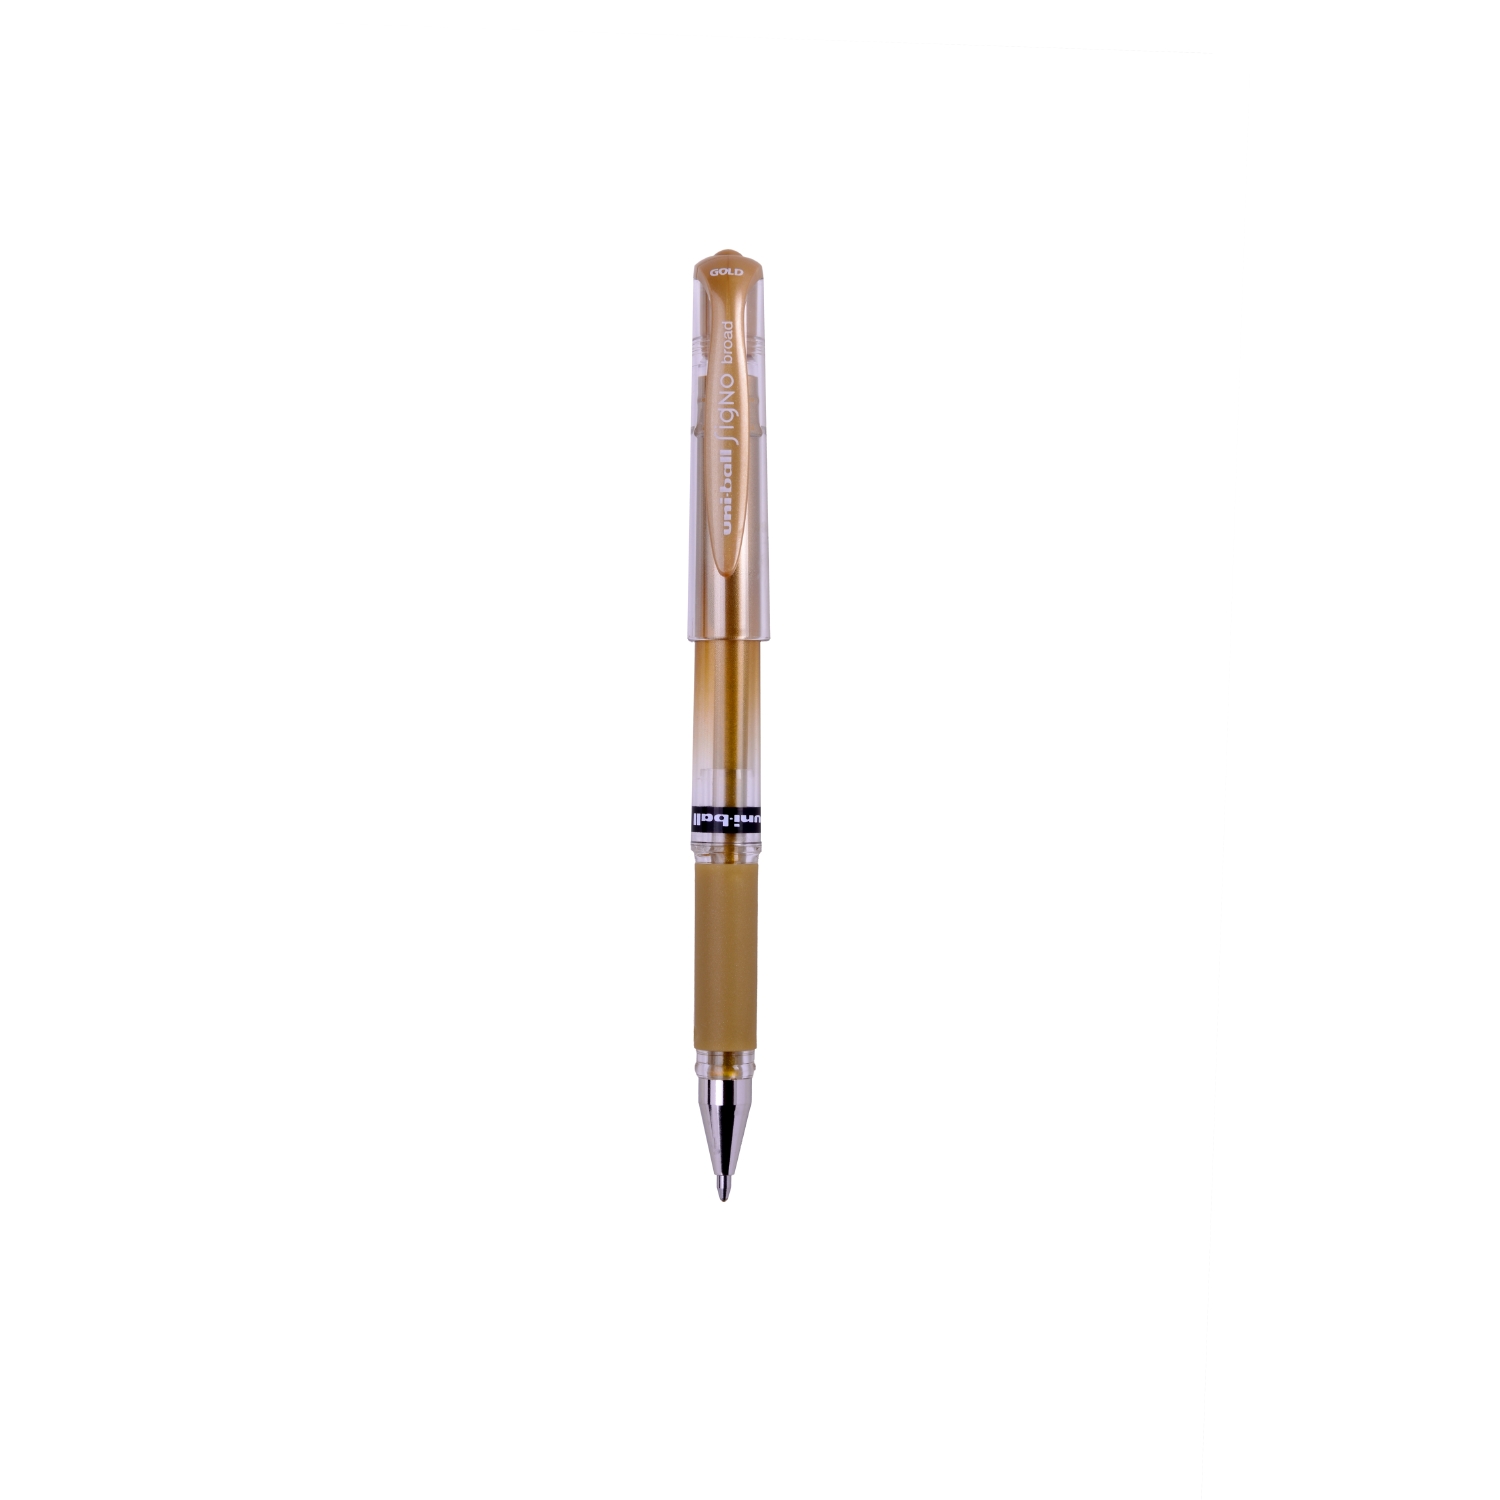 Uniball Signo Broad Pen UM-153 - Gold Image